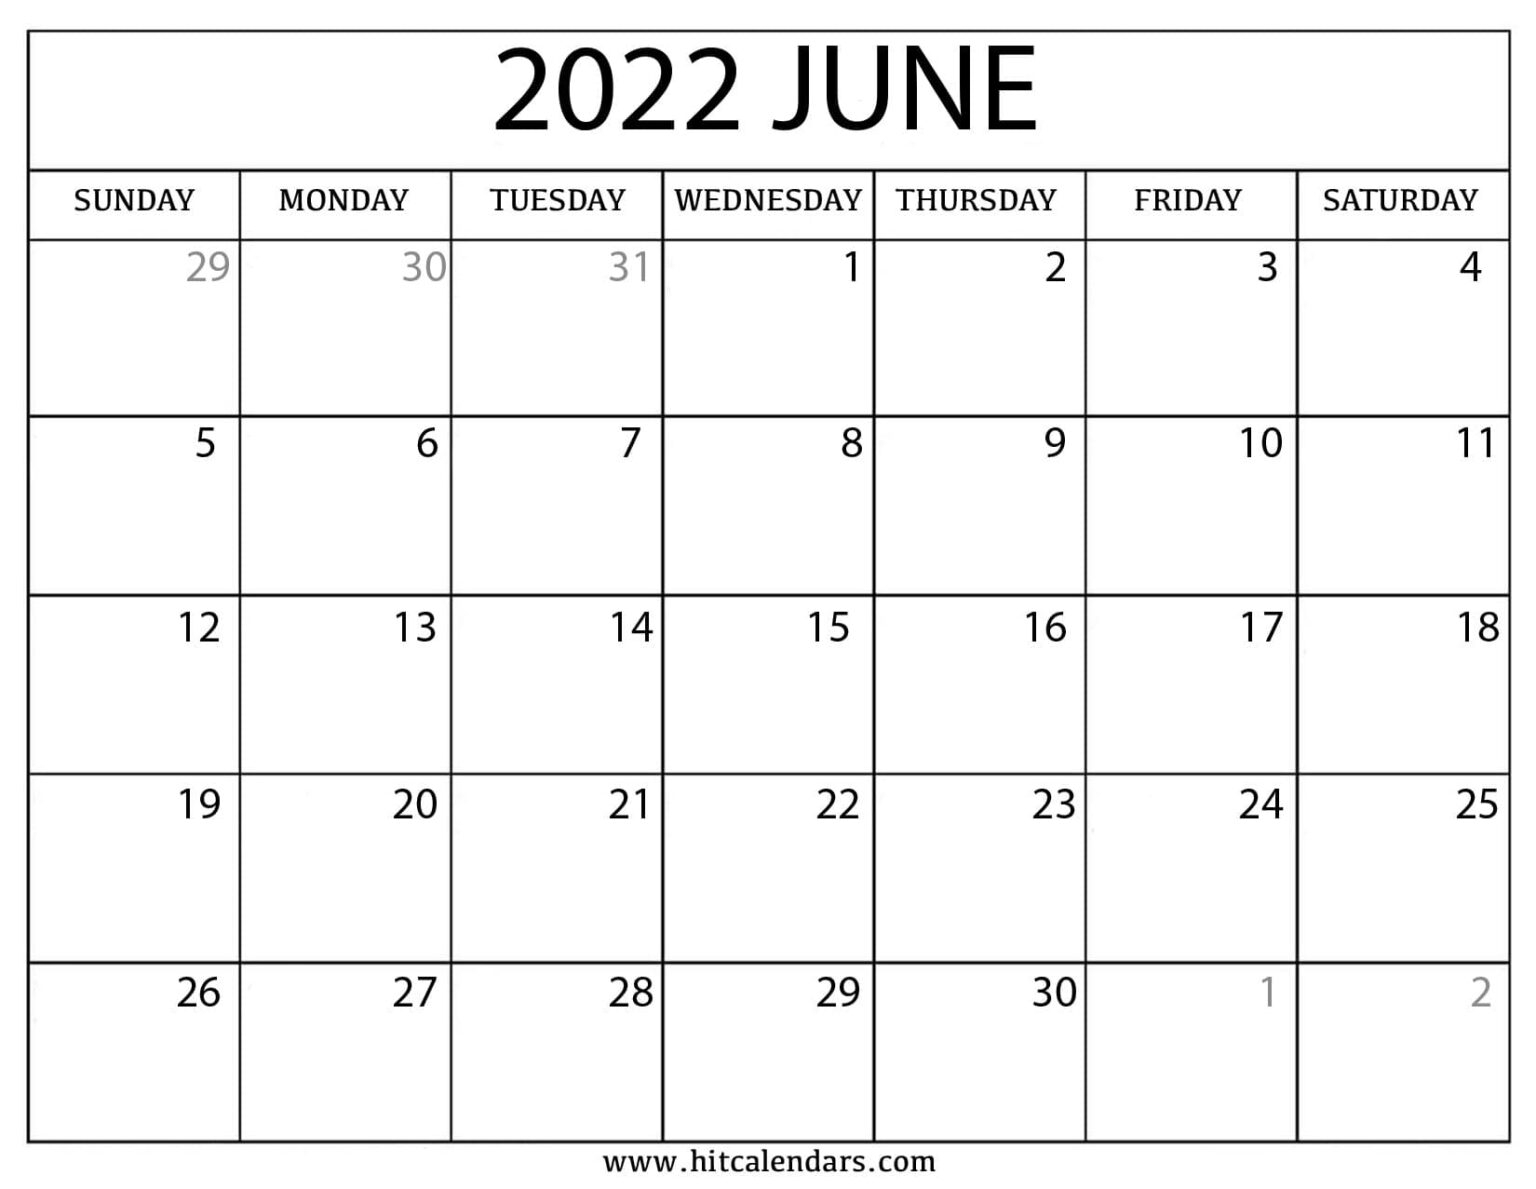 Take Show Calendar For July 2022